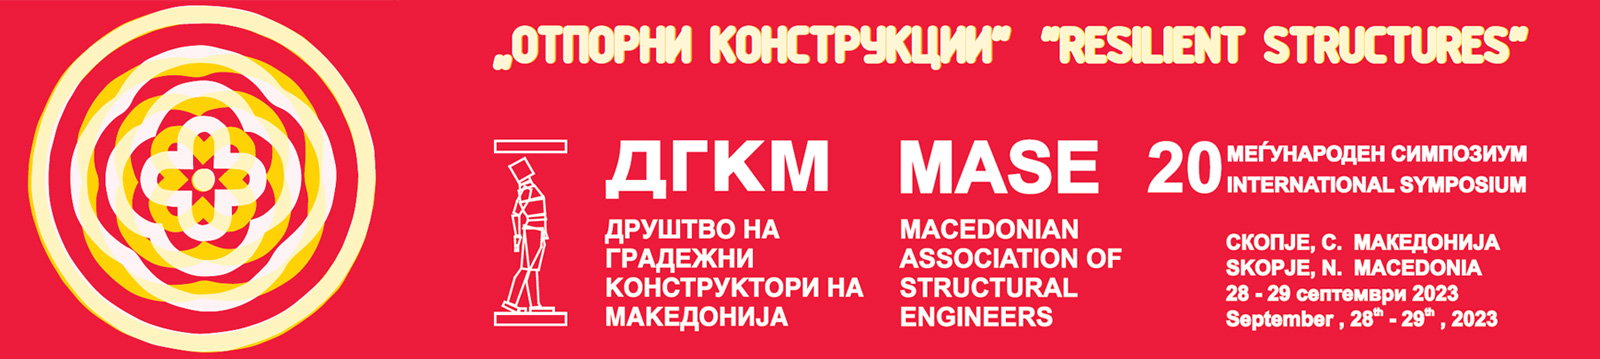 20-ти Симпозиум на Друштвото на градежни конструктори на Македонија